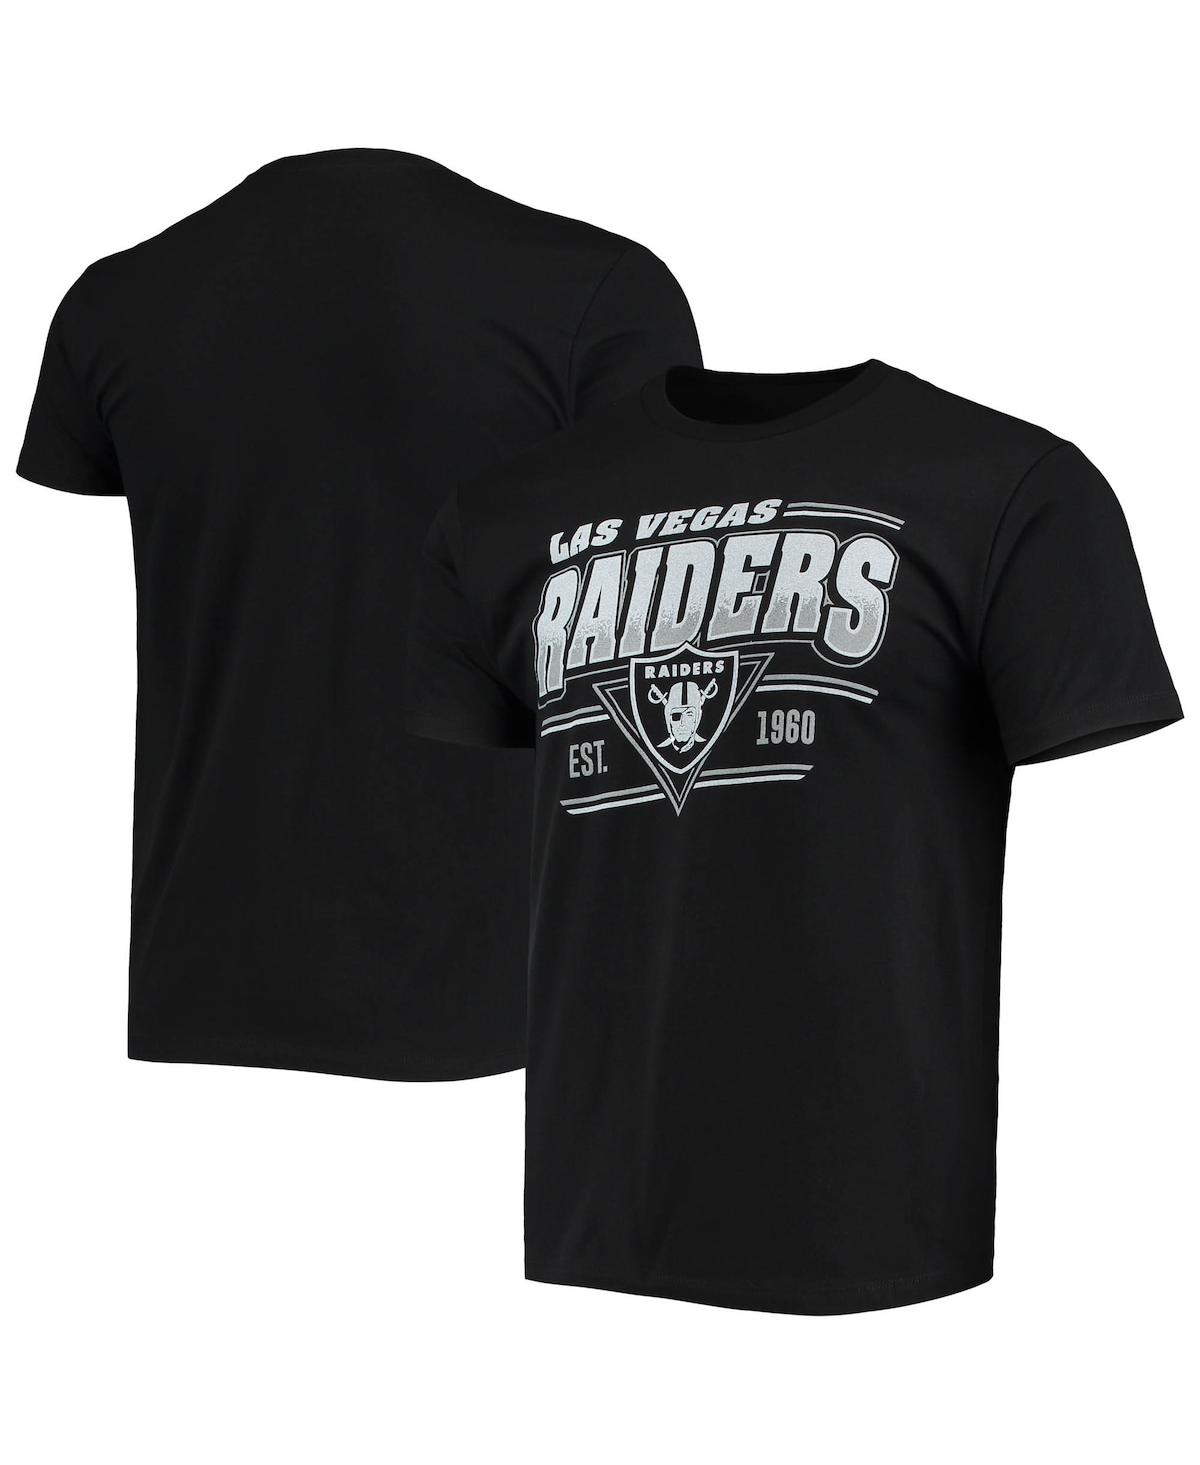 Men's Black Las Vegas Raiders Throwback T-shirt - Black